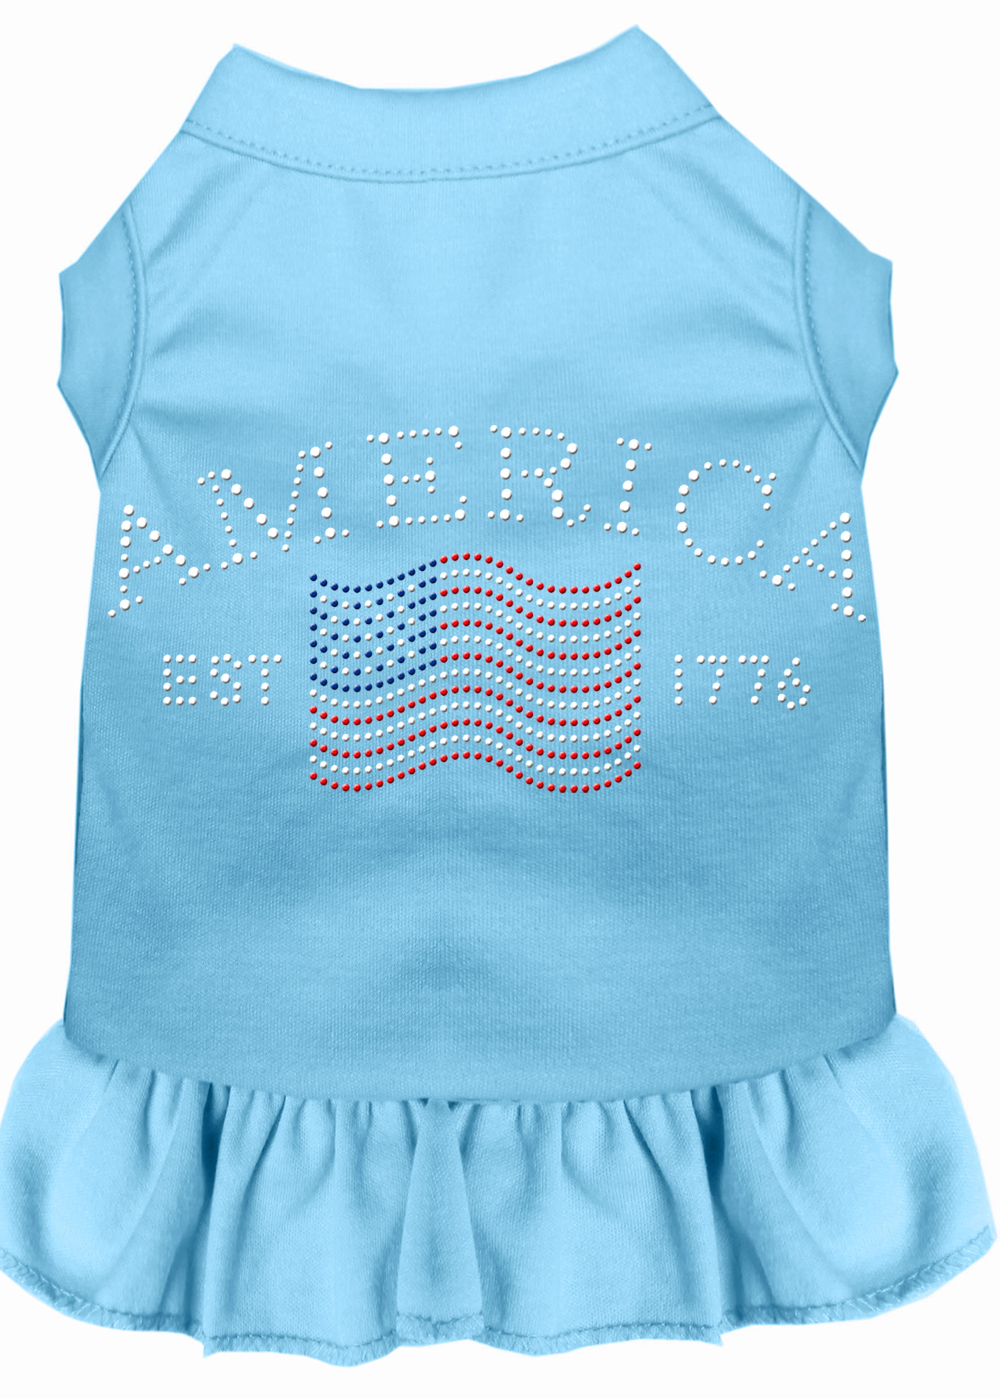 Classic America Rhinestone Dress Baby Blue XL